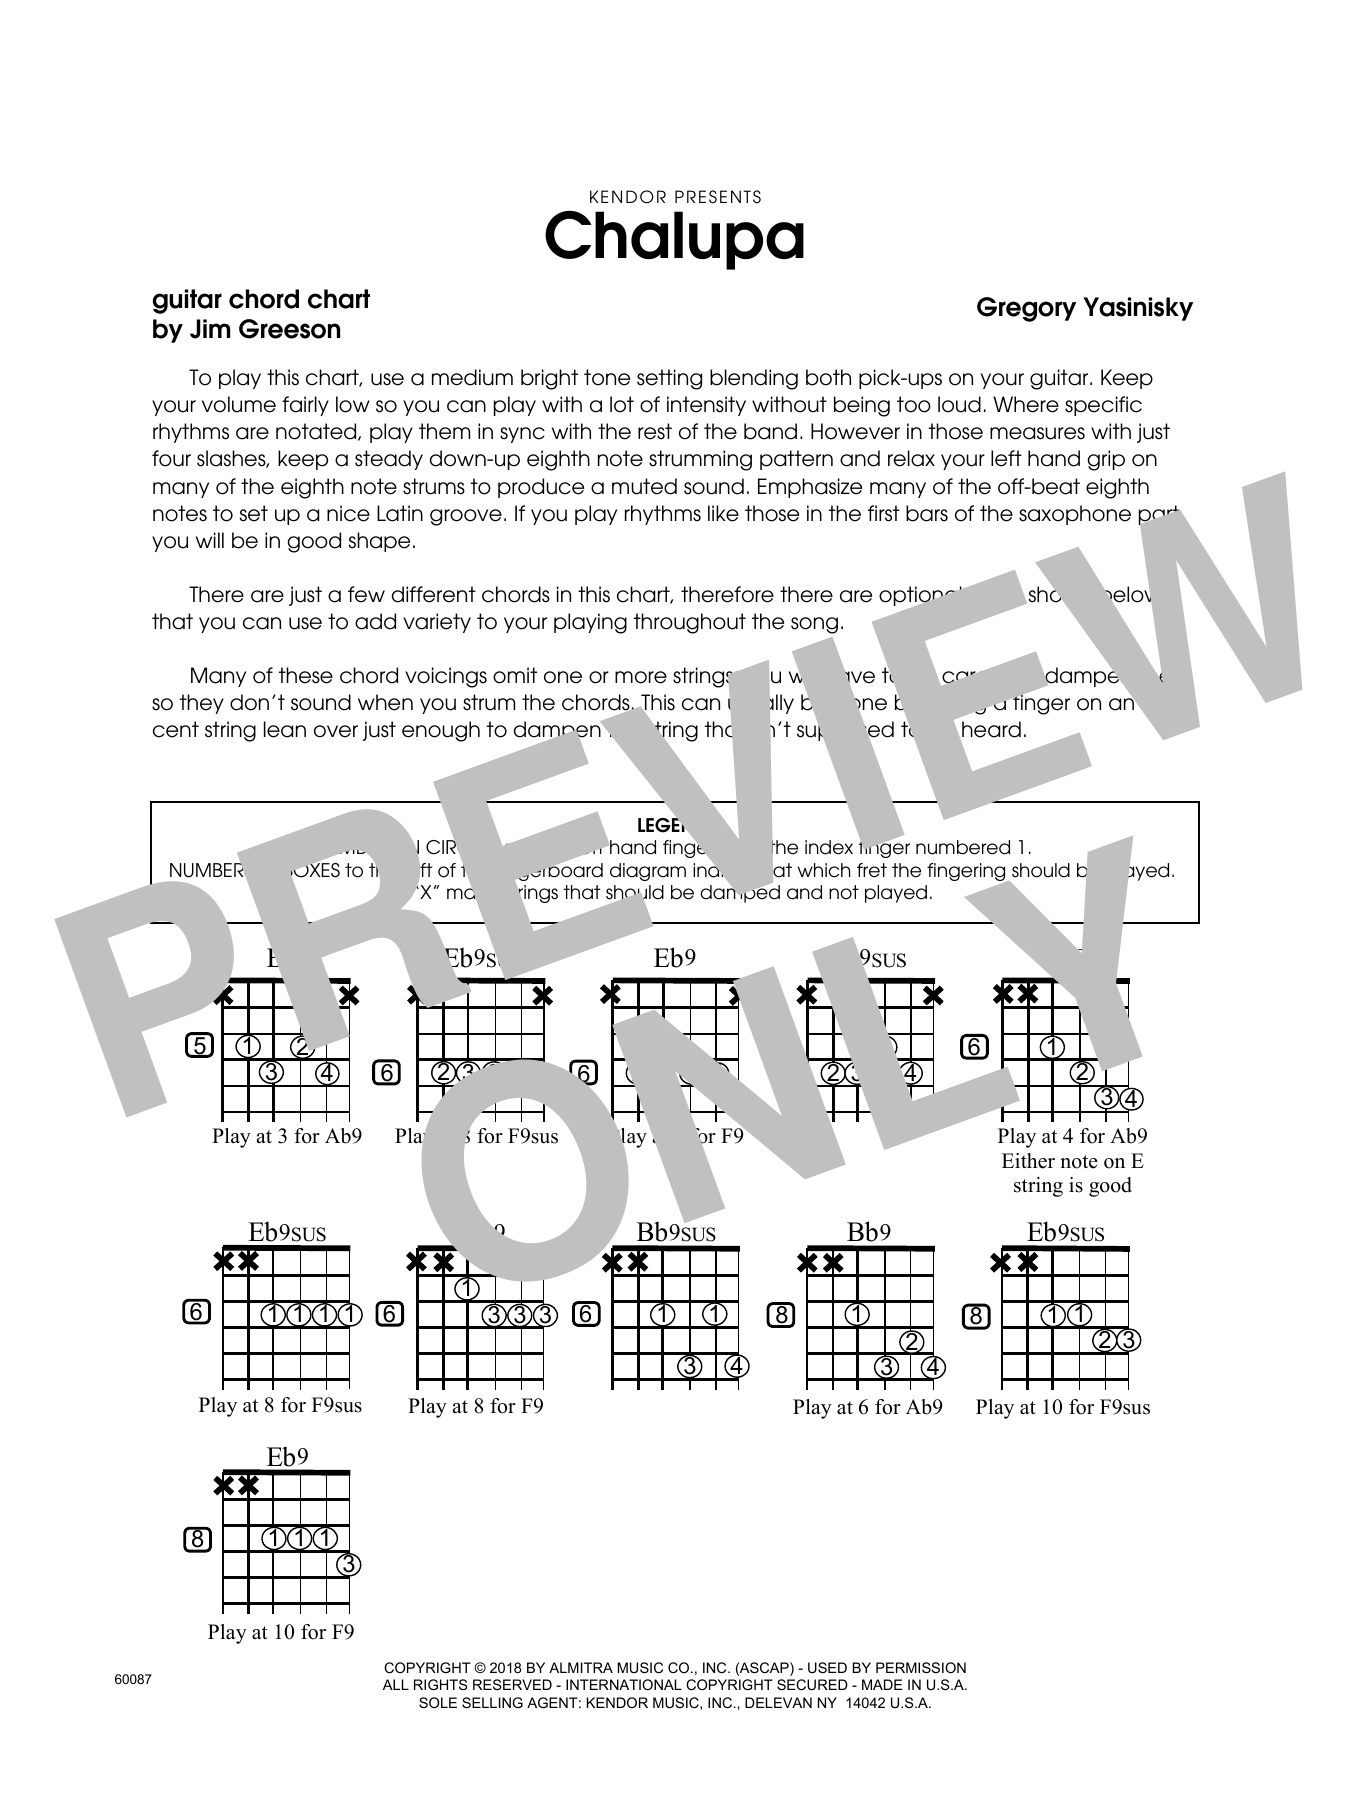 Download Gregory Yasinitsky Chalupa - Guitar Chord Chart Sheet Music